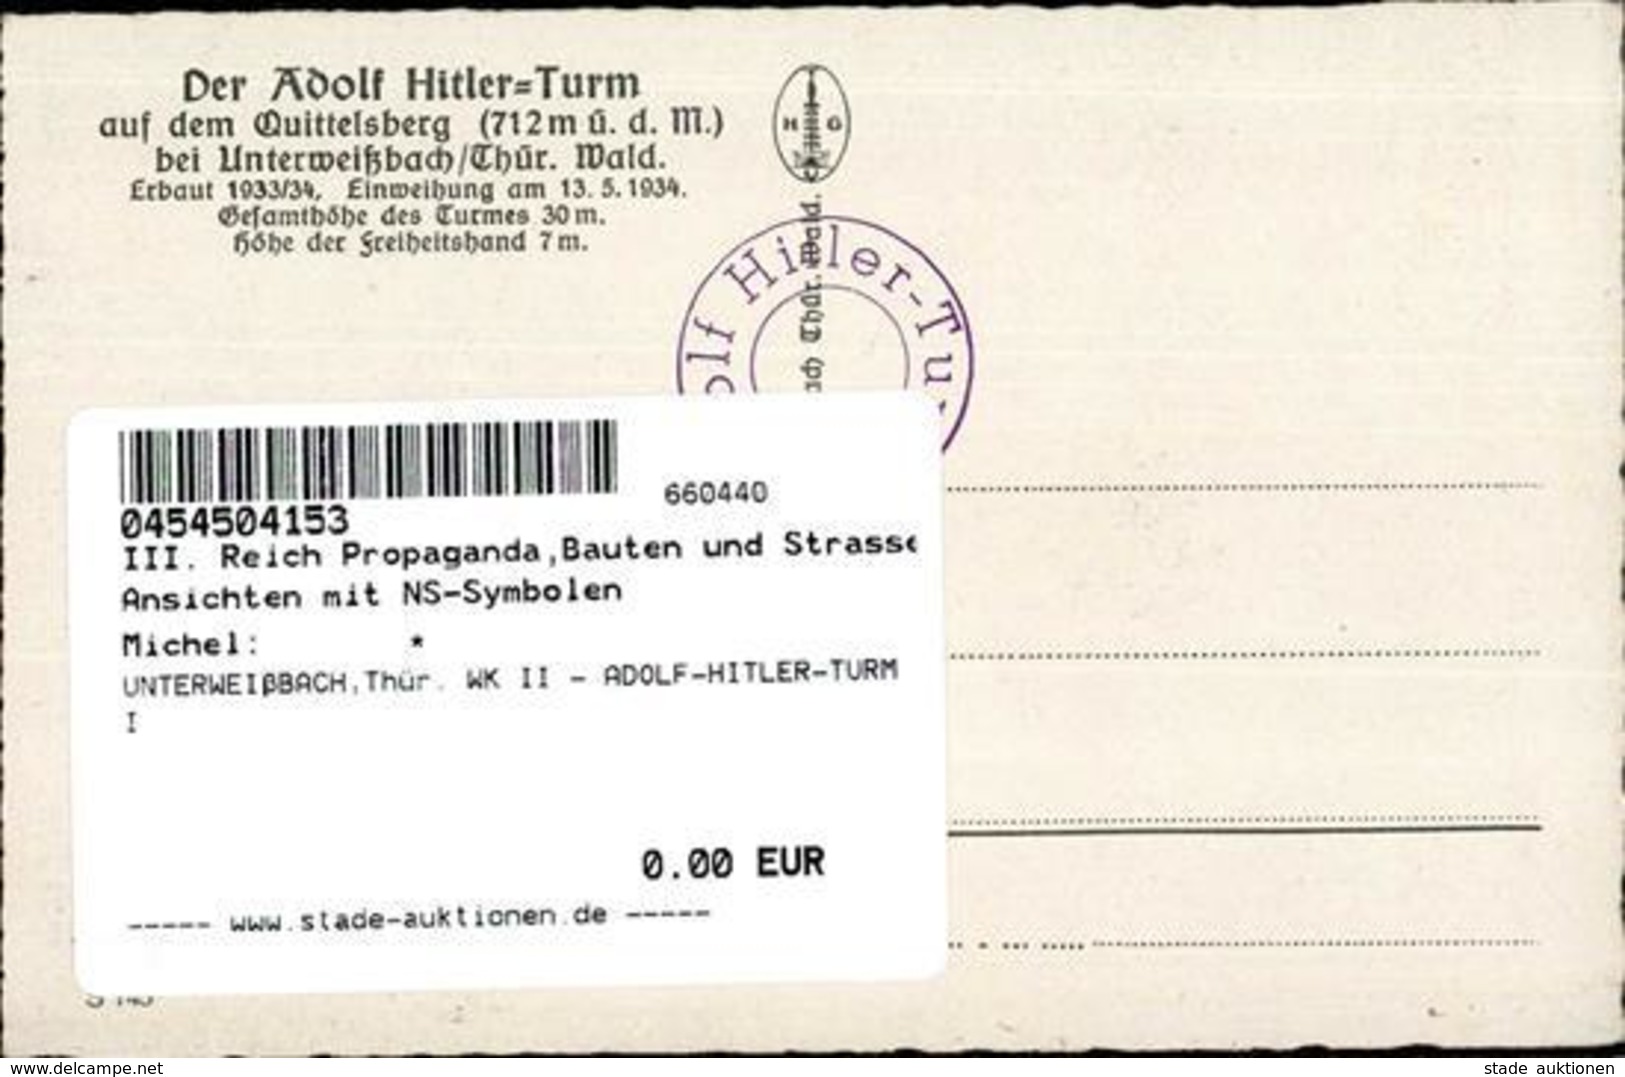 UNTERWEIßBACH,Thür. WK II - ADOLF-HITLER-TURM I - Guerra 1939-45